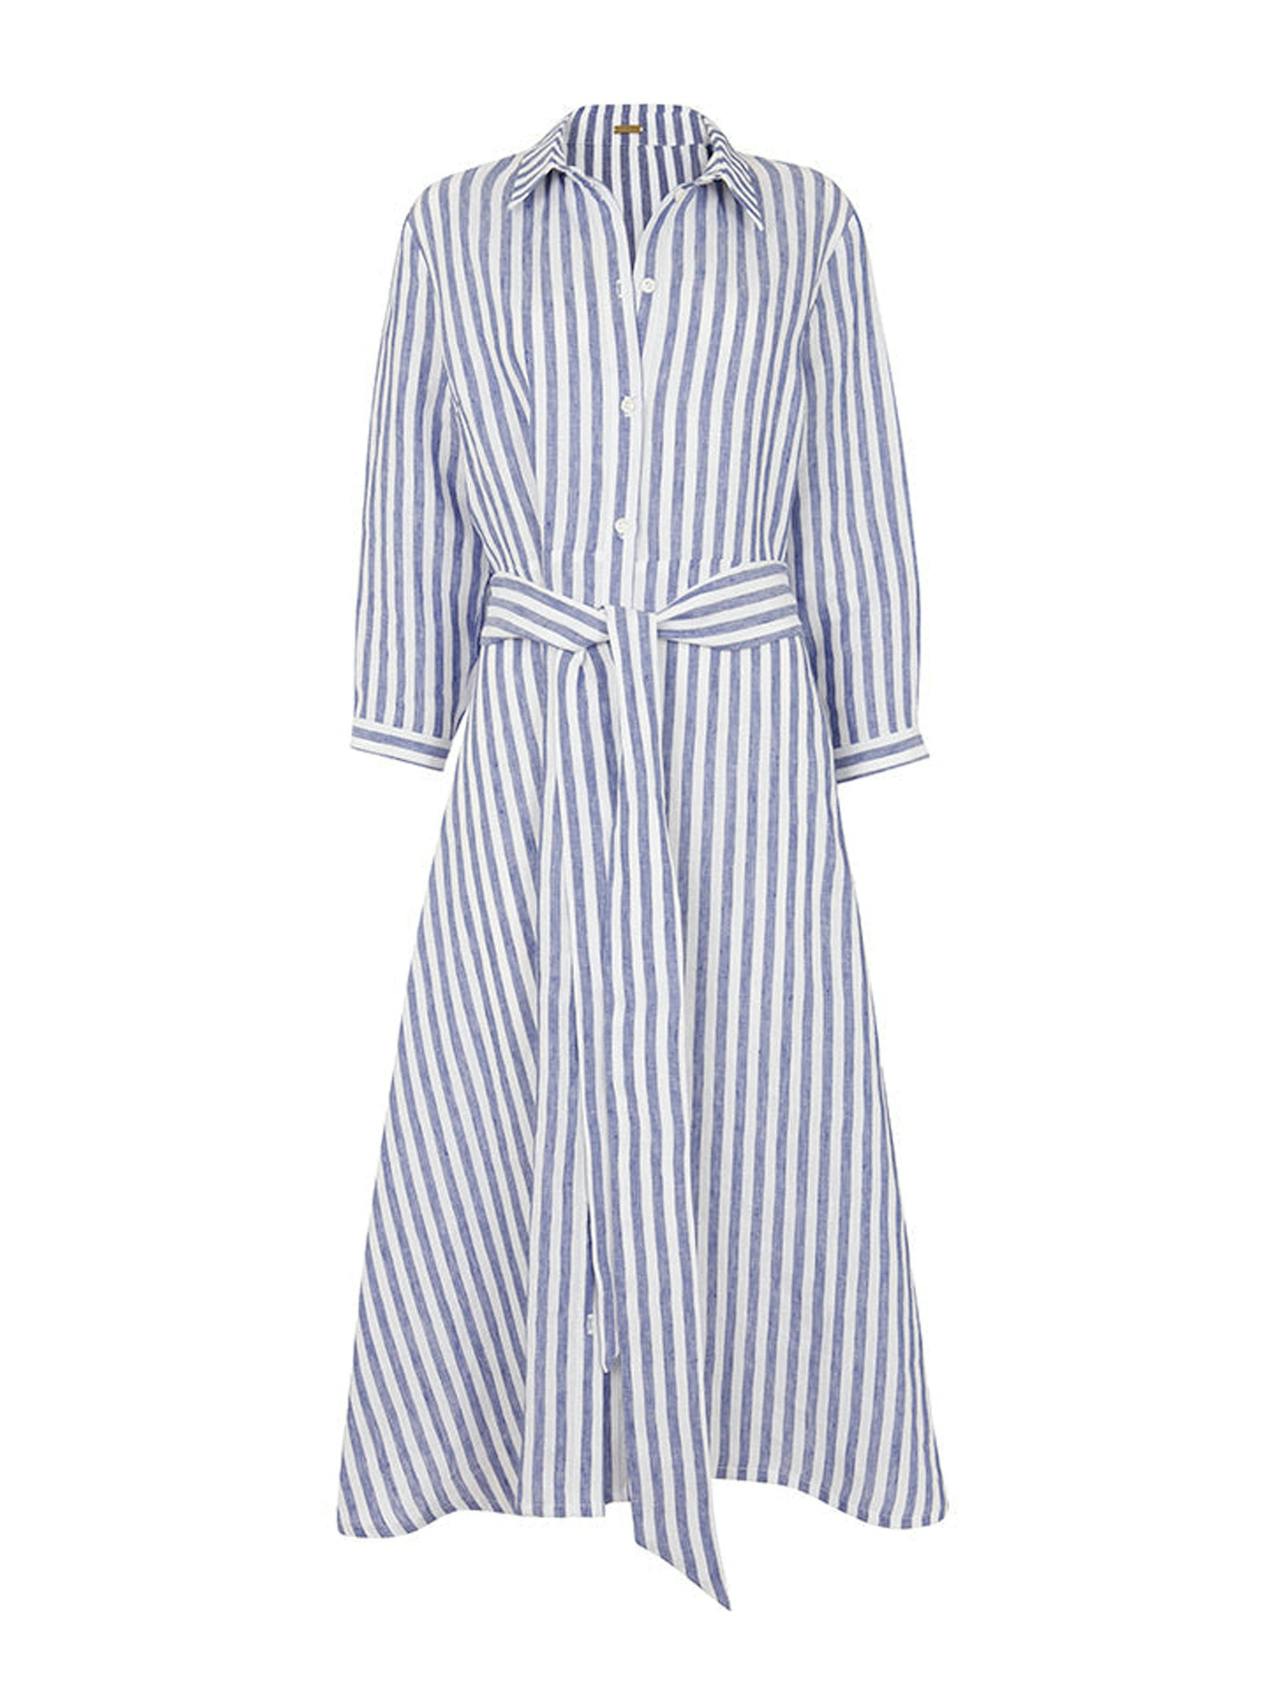 Striped St Tropez shirt dress